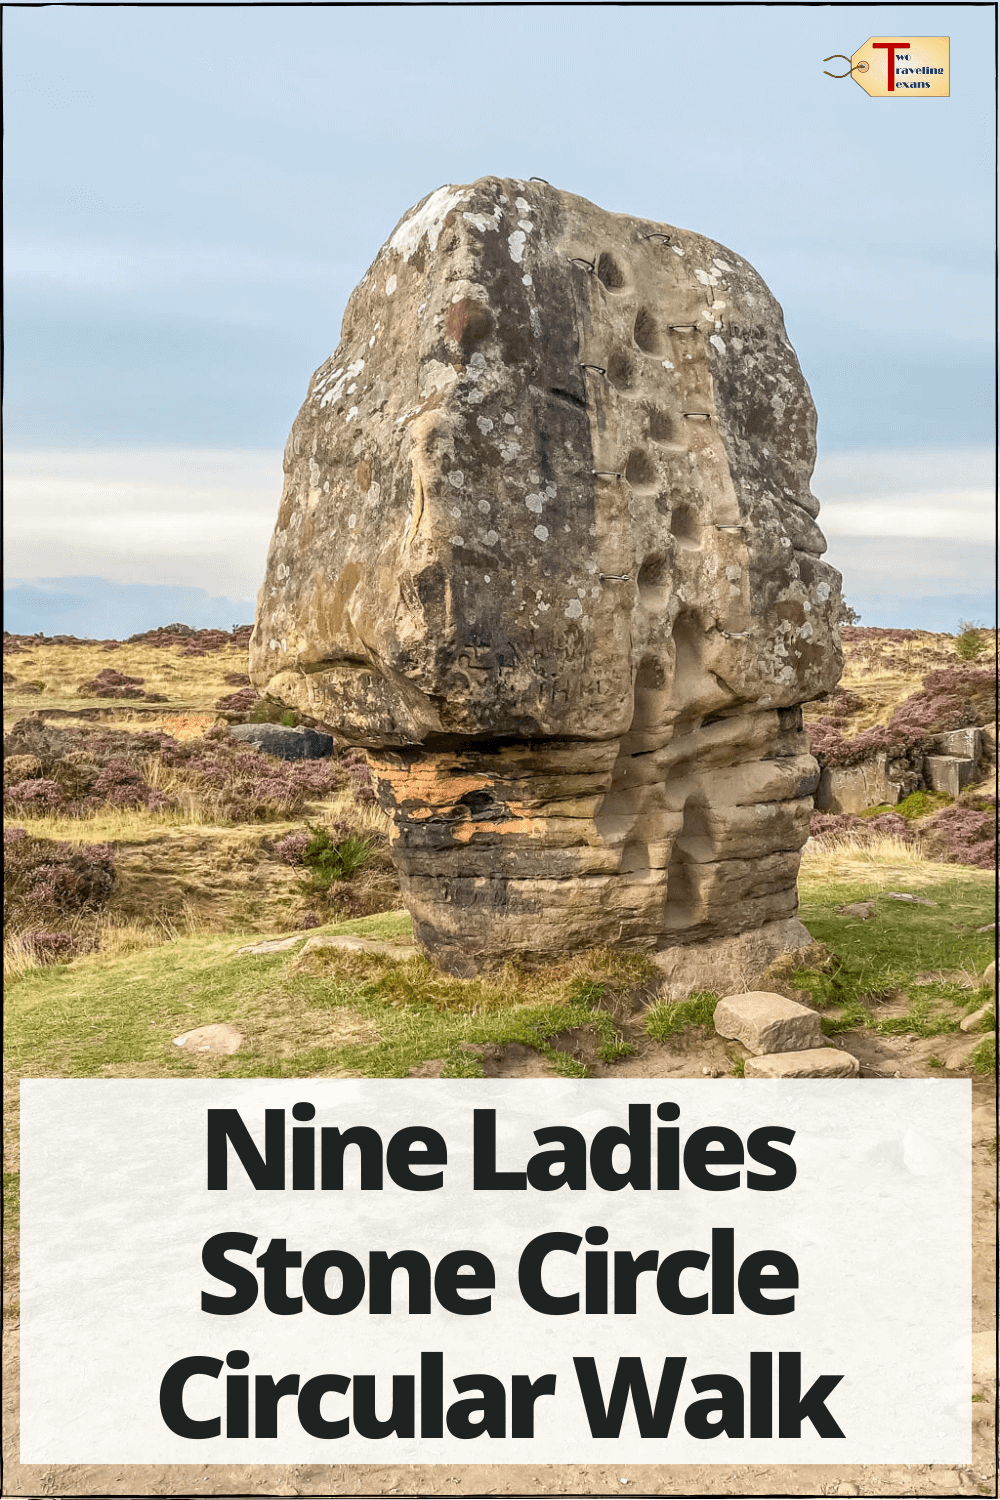 cork stone in stanton moor with text overlay "nine ladies stone circle circular walk"